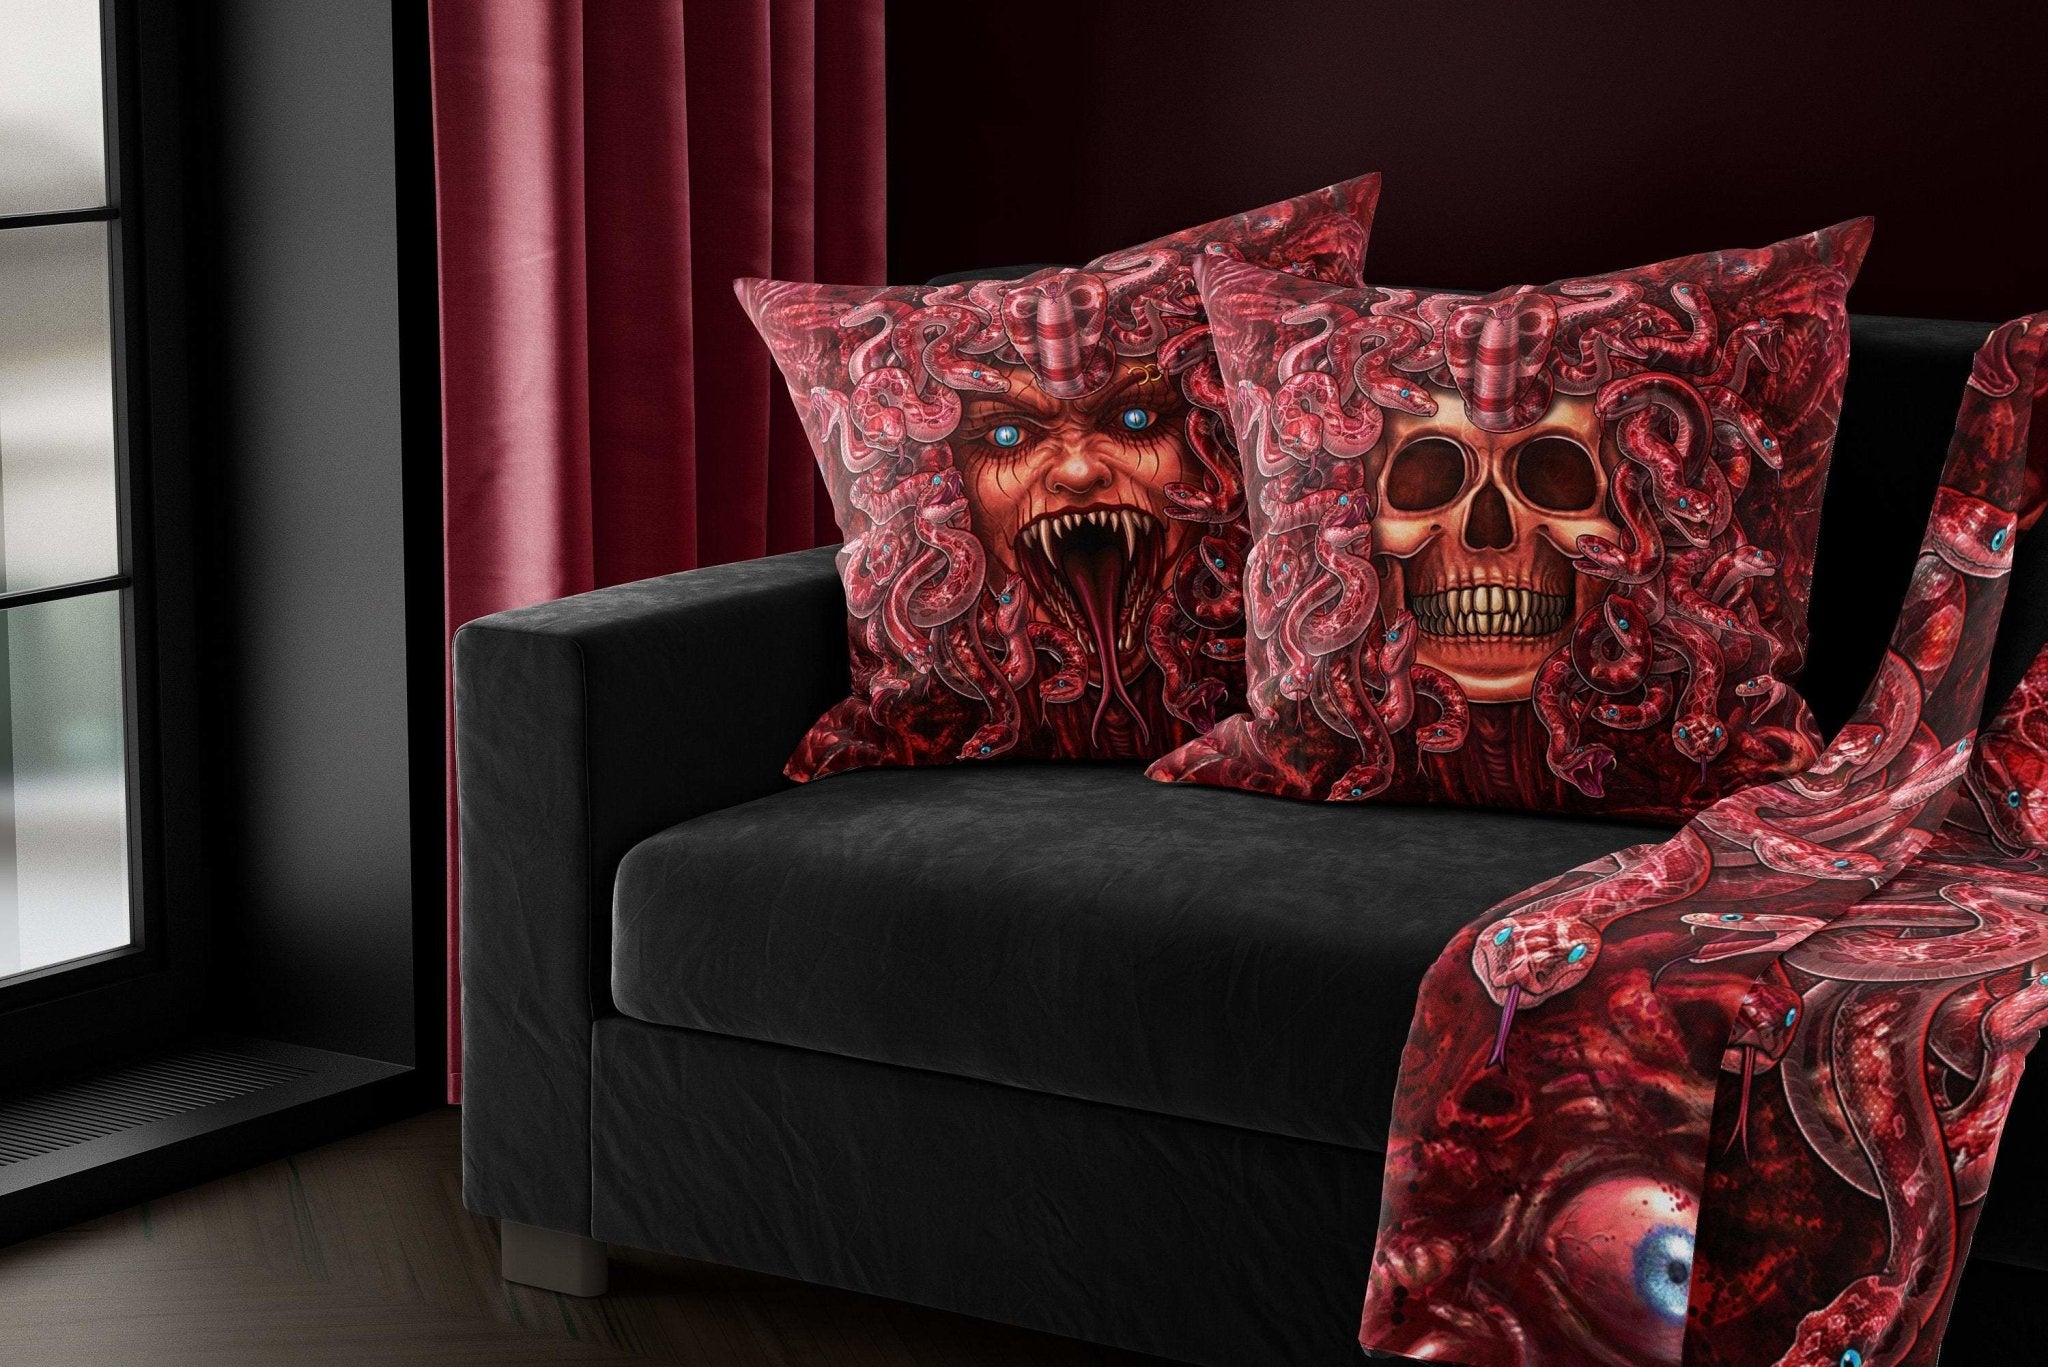 Horror Throw Pillow, Decorative Accent Cushion, Medusa, Halloween Room Decor, Alternative Home - Gore & Flesh Snakes, Rage - Abysm Internal